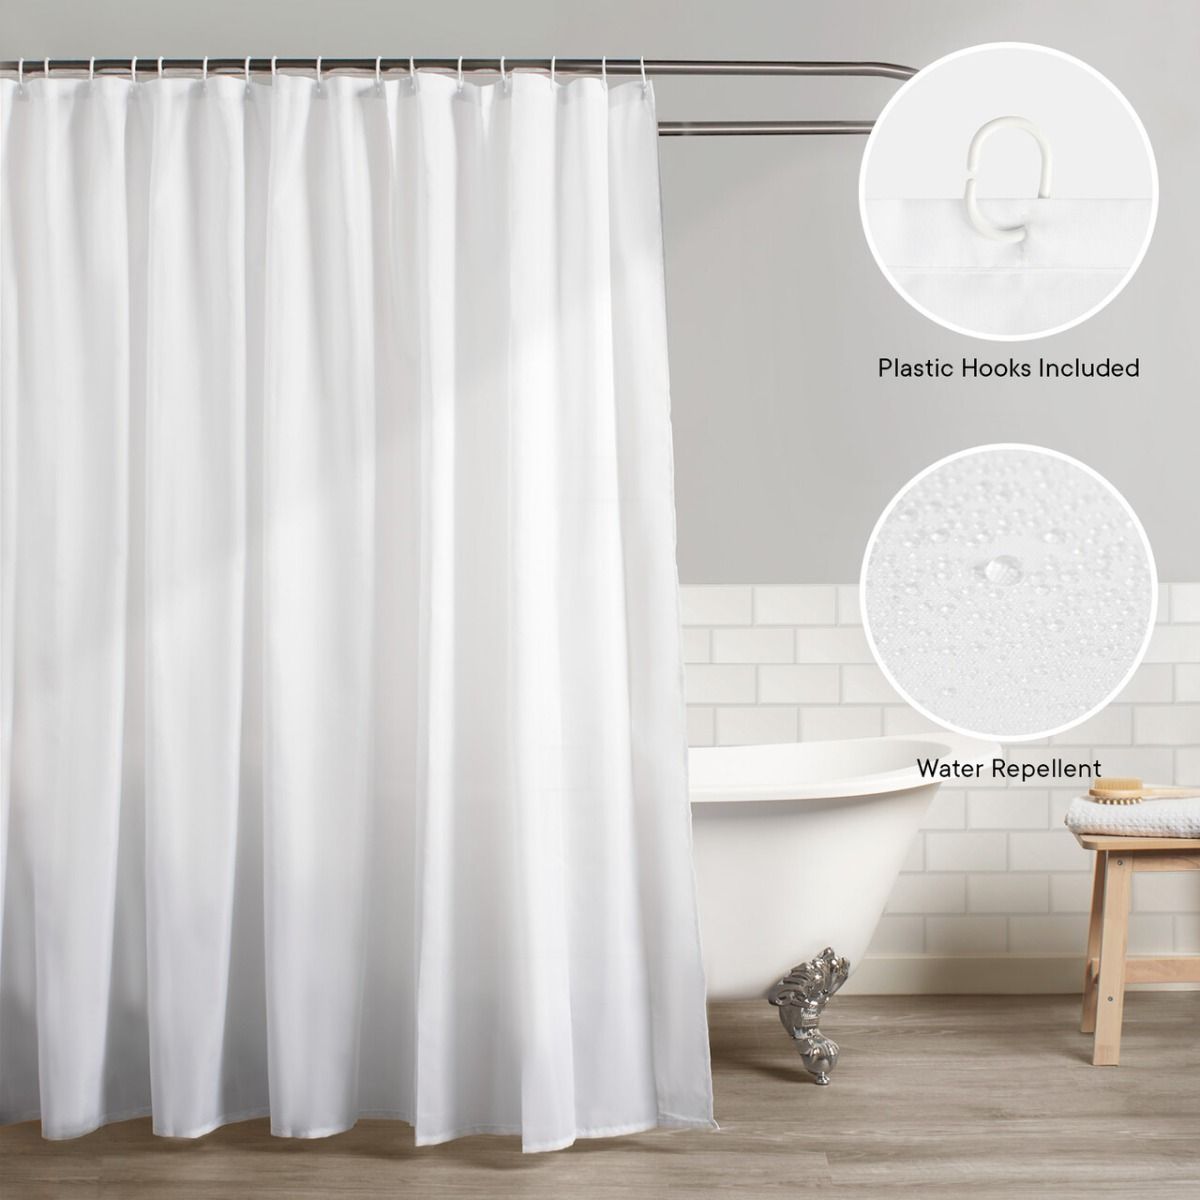 OHS Bathroom Shower Curtain - White